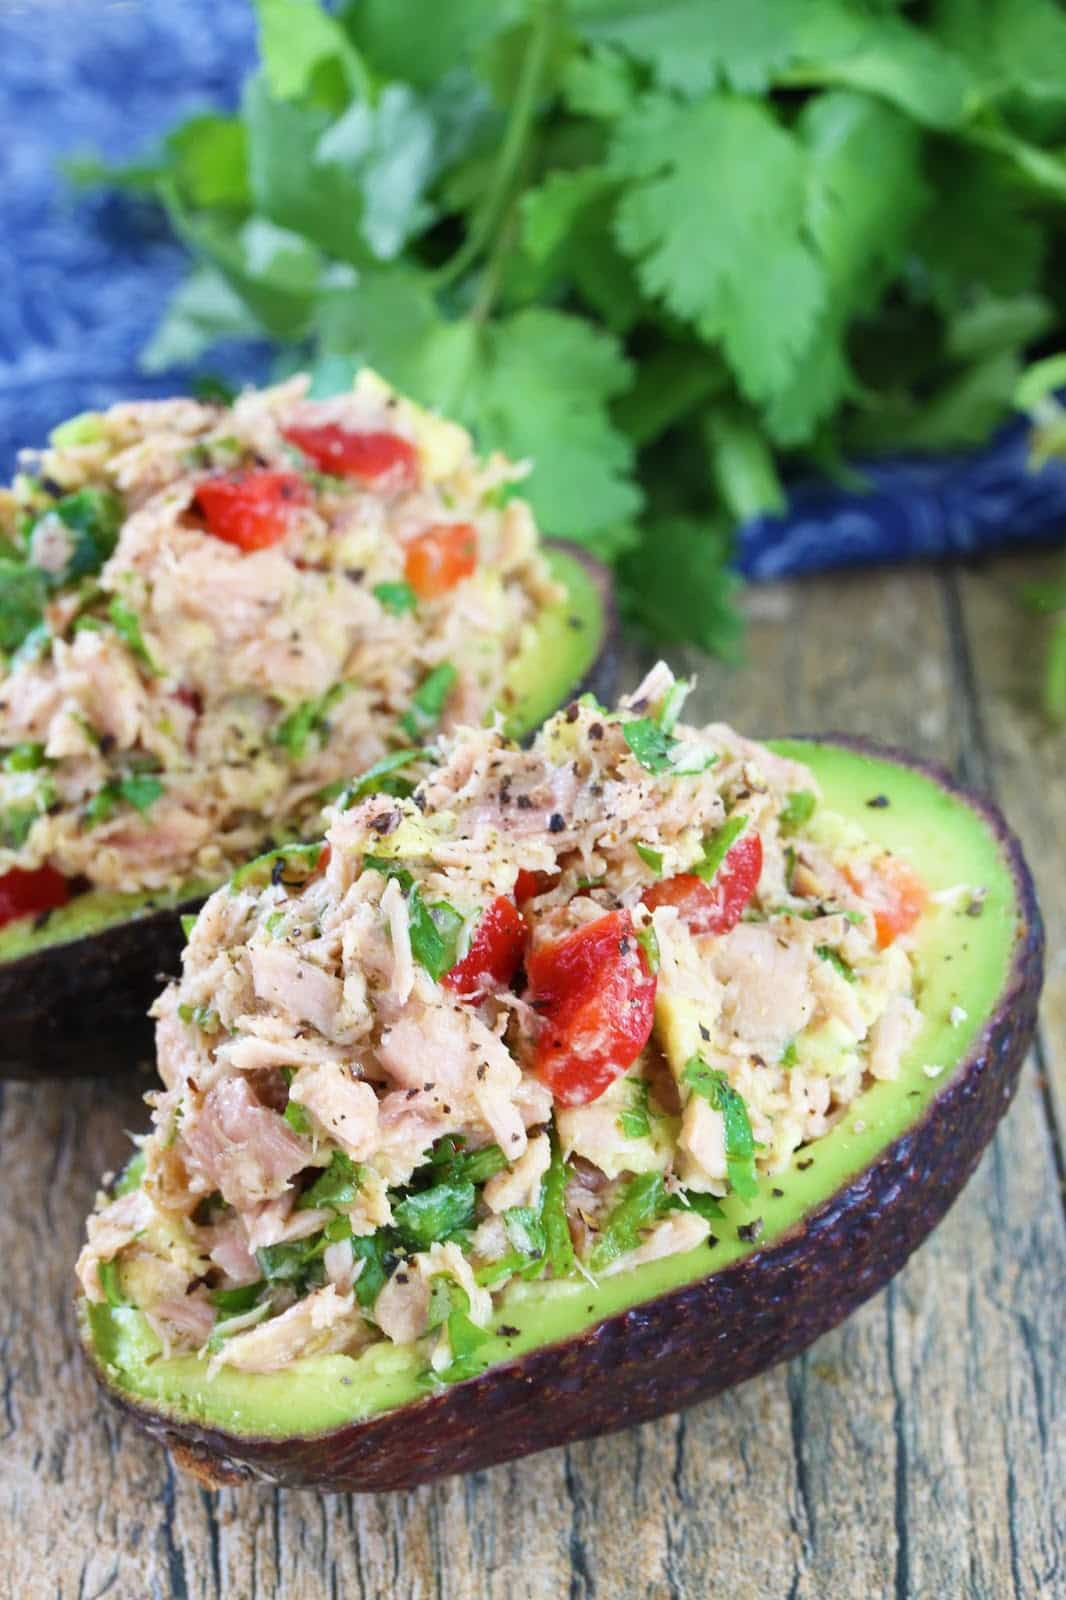 Avocado Recipes Healthy the 20 Best Ideas for Healthy Thai Tuna Stuffed Avocado